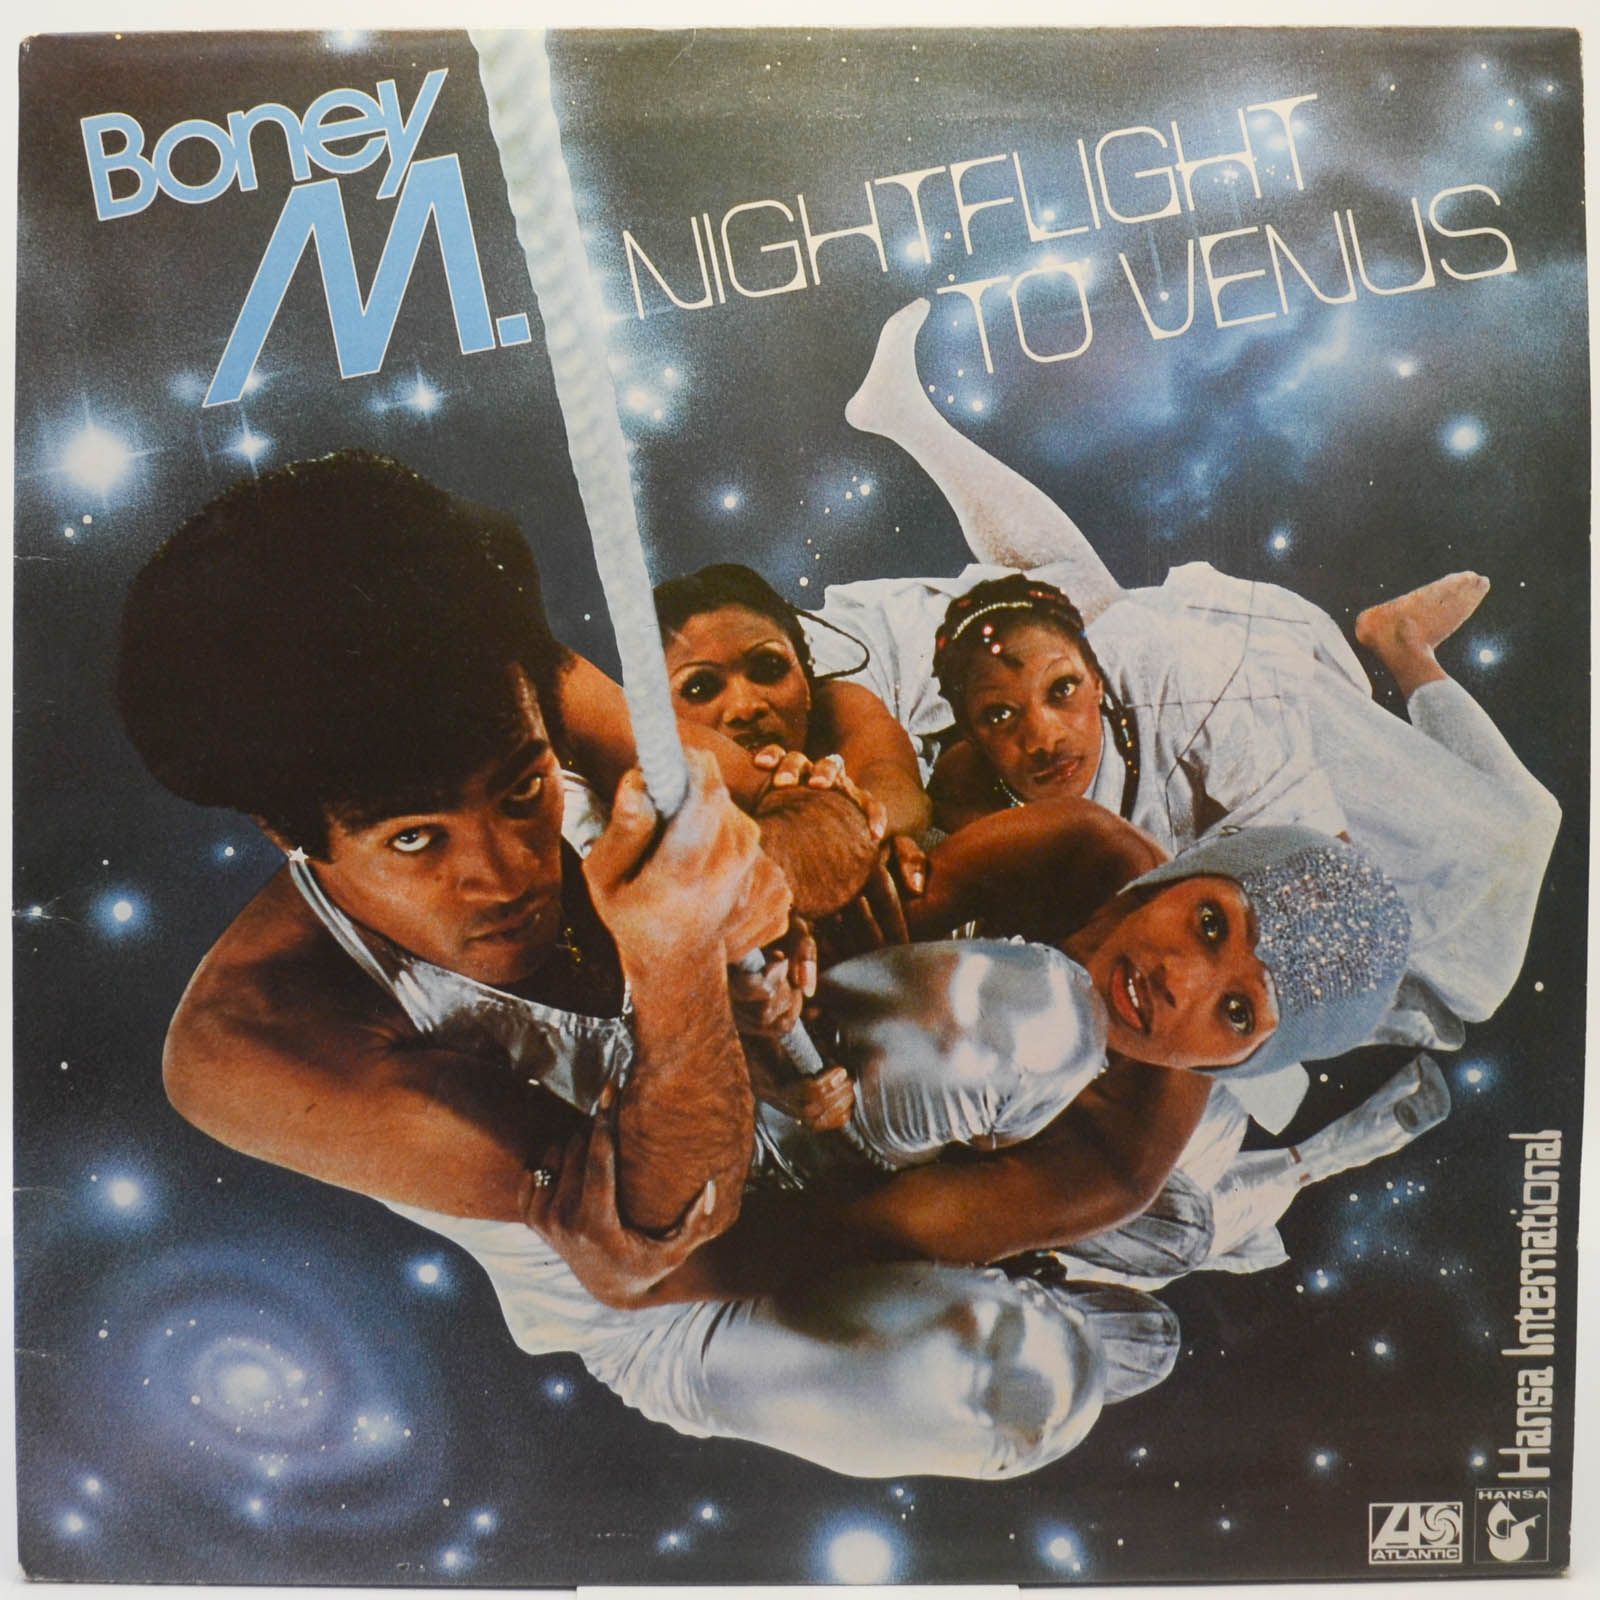 Boney M. — Nightflight To Venus (UK), 1978